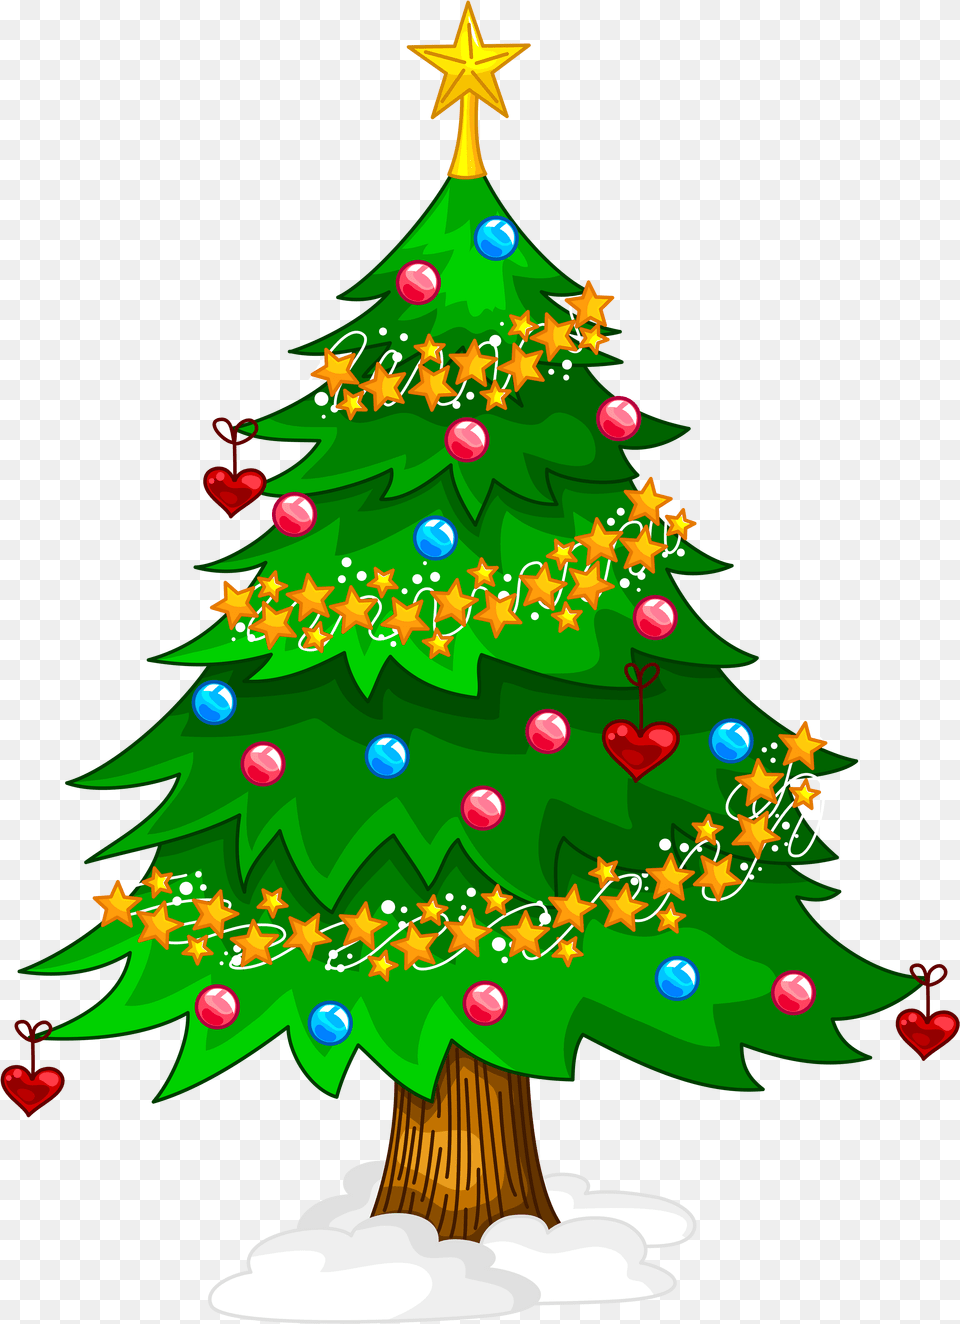 Christmas Tree Clip Art Christmas Tree Hd, Plant, Christmas Decorations, Festival, Christmas Tree Png Image